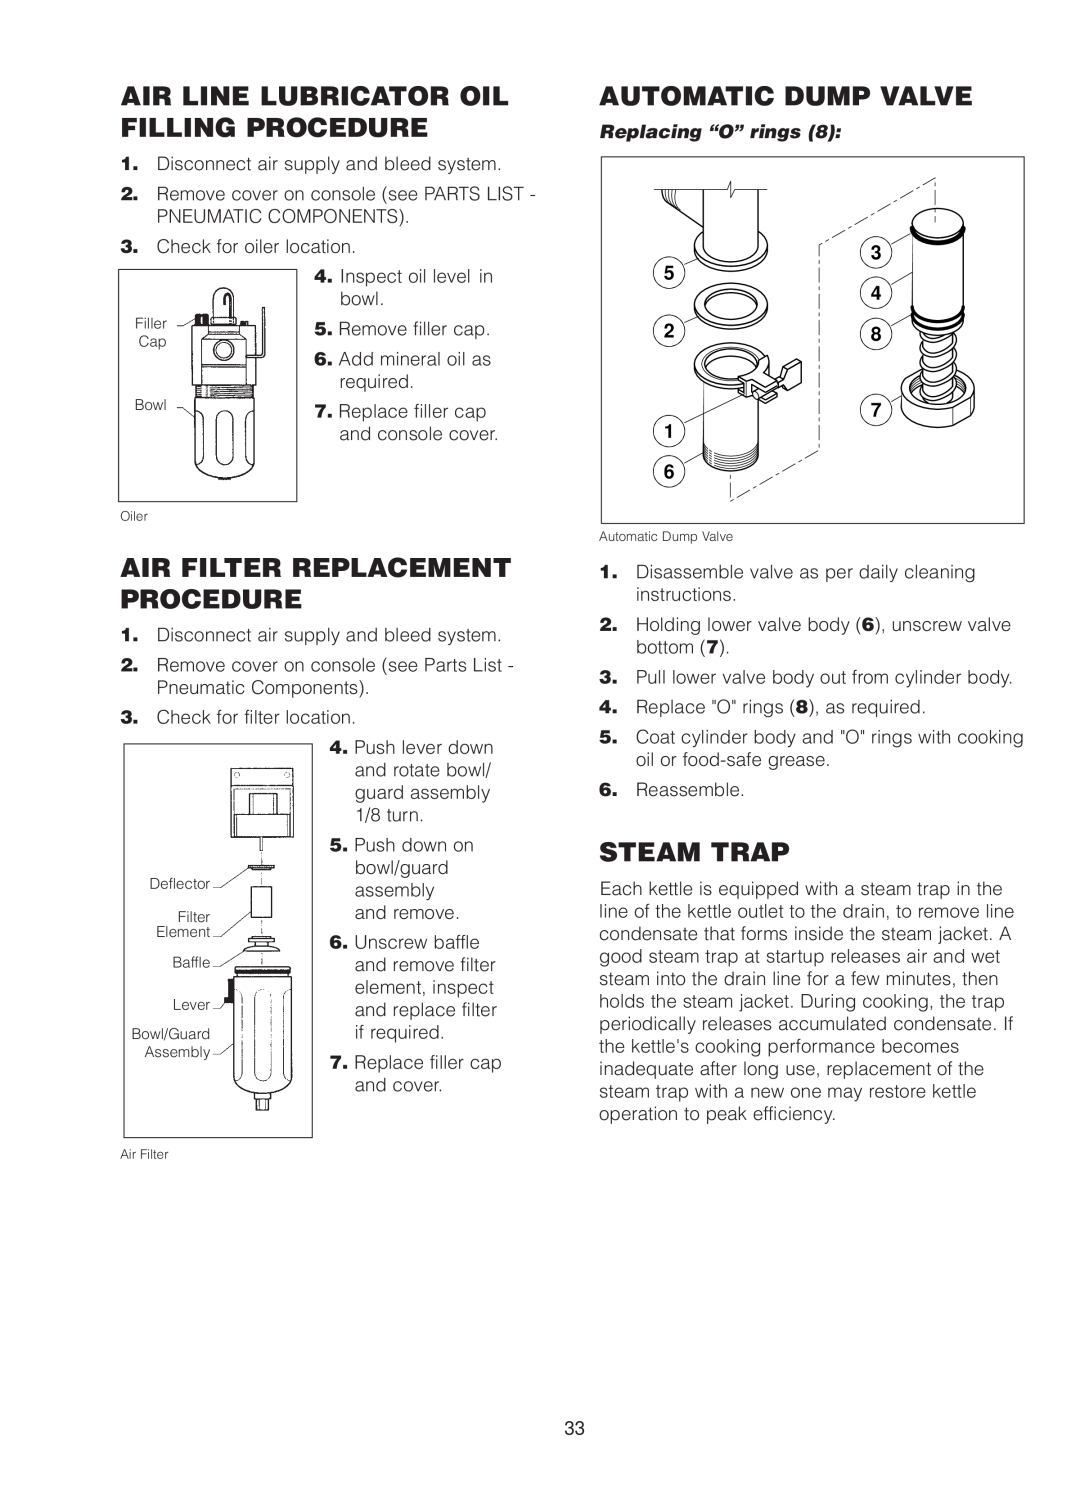 Cleveland Range MKDL-125-CC manual Air Line Lubricator Oil Filling Procedure, Air Filter Replacement Procedure, Steam Trap 